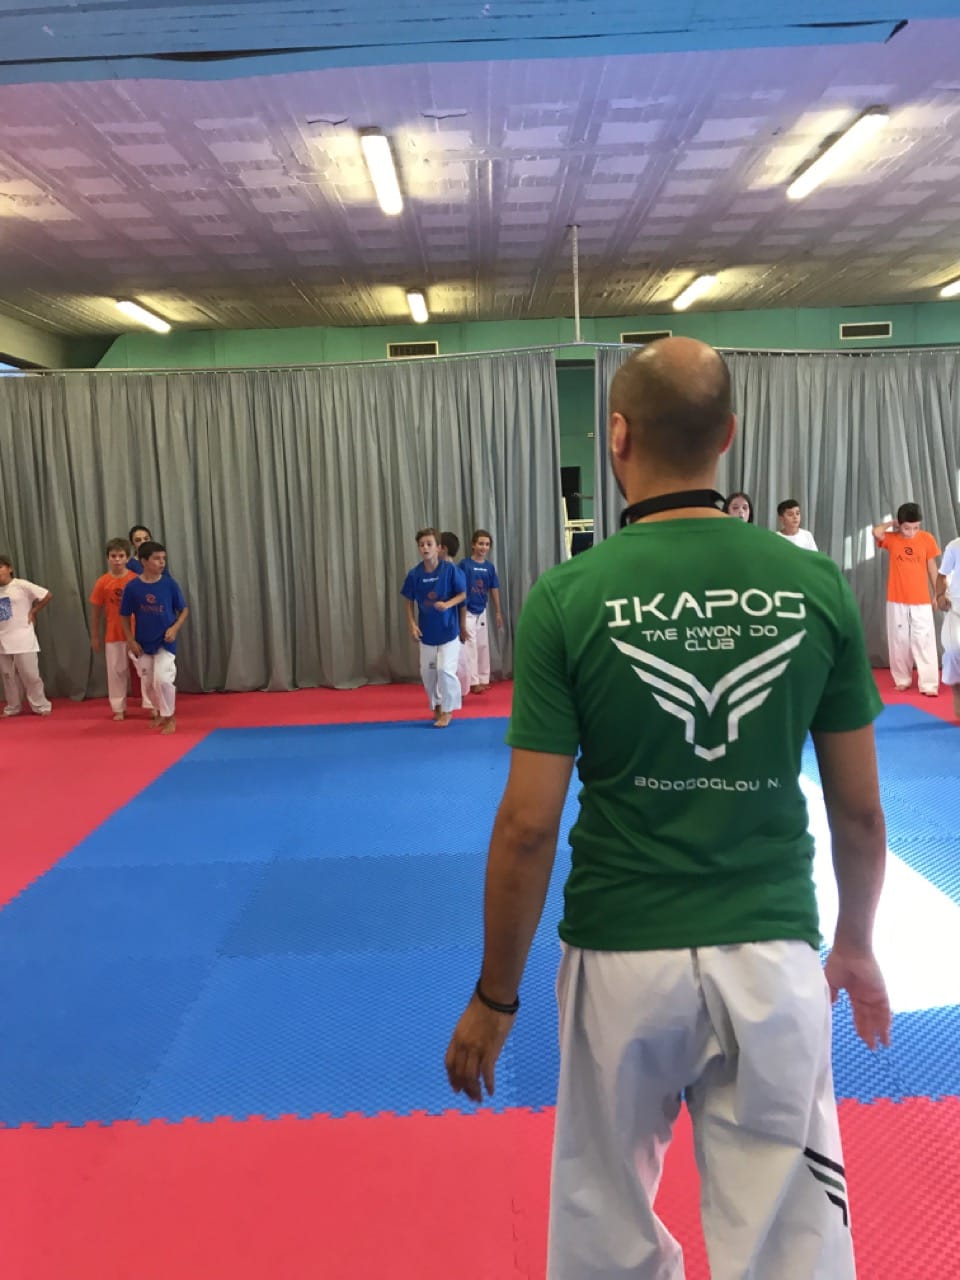 ikaros-taekwondo-zografou-09-sportshunter